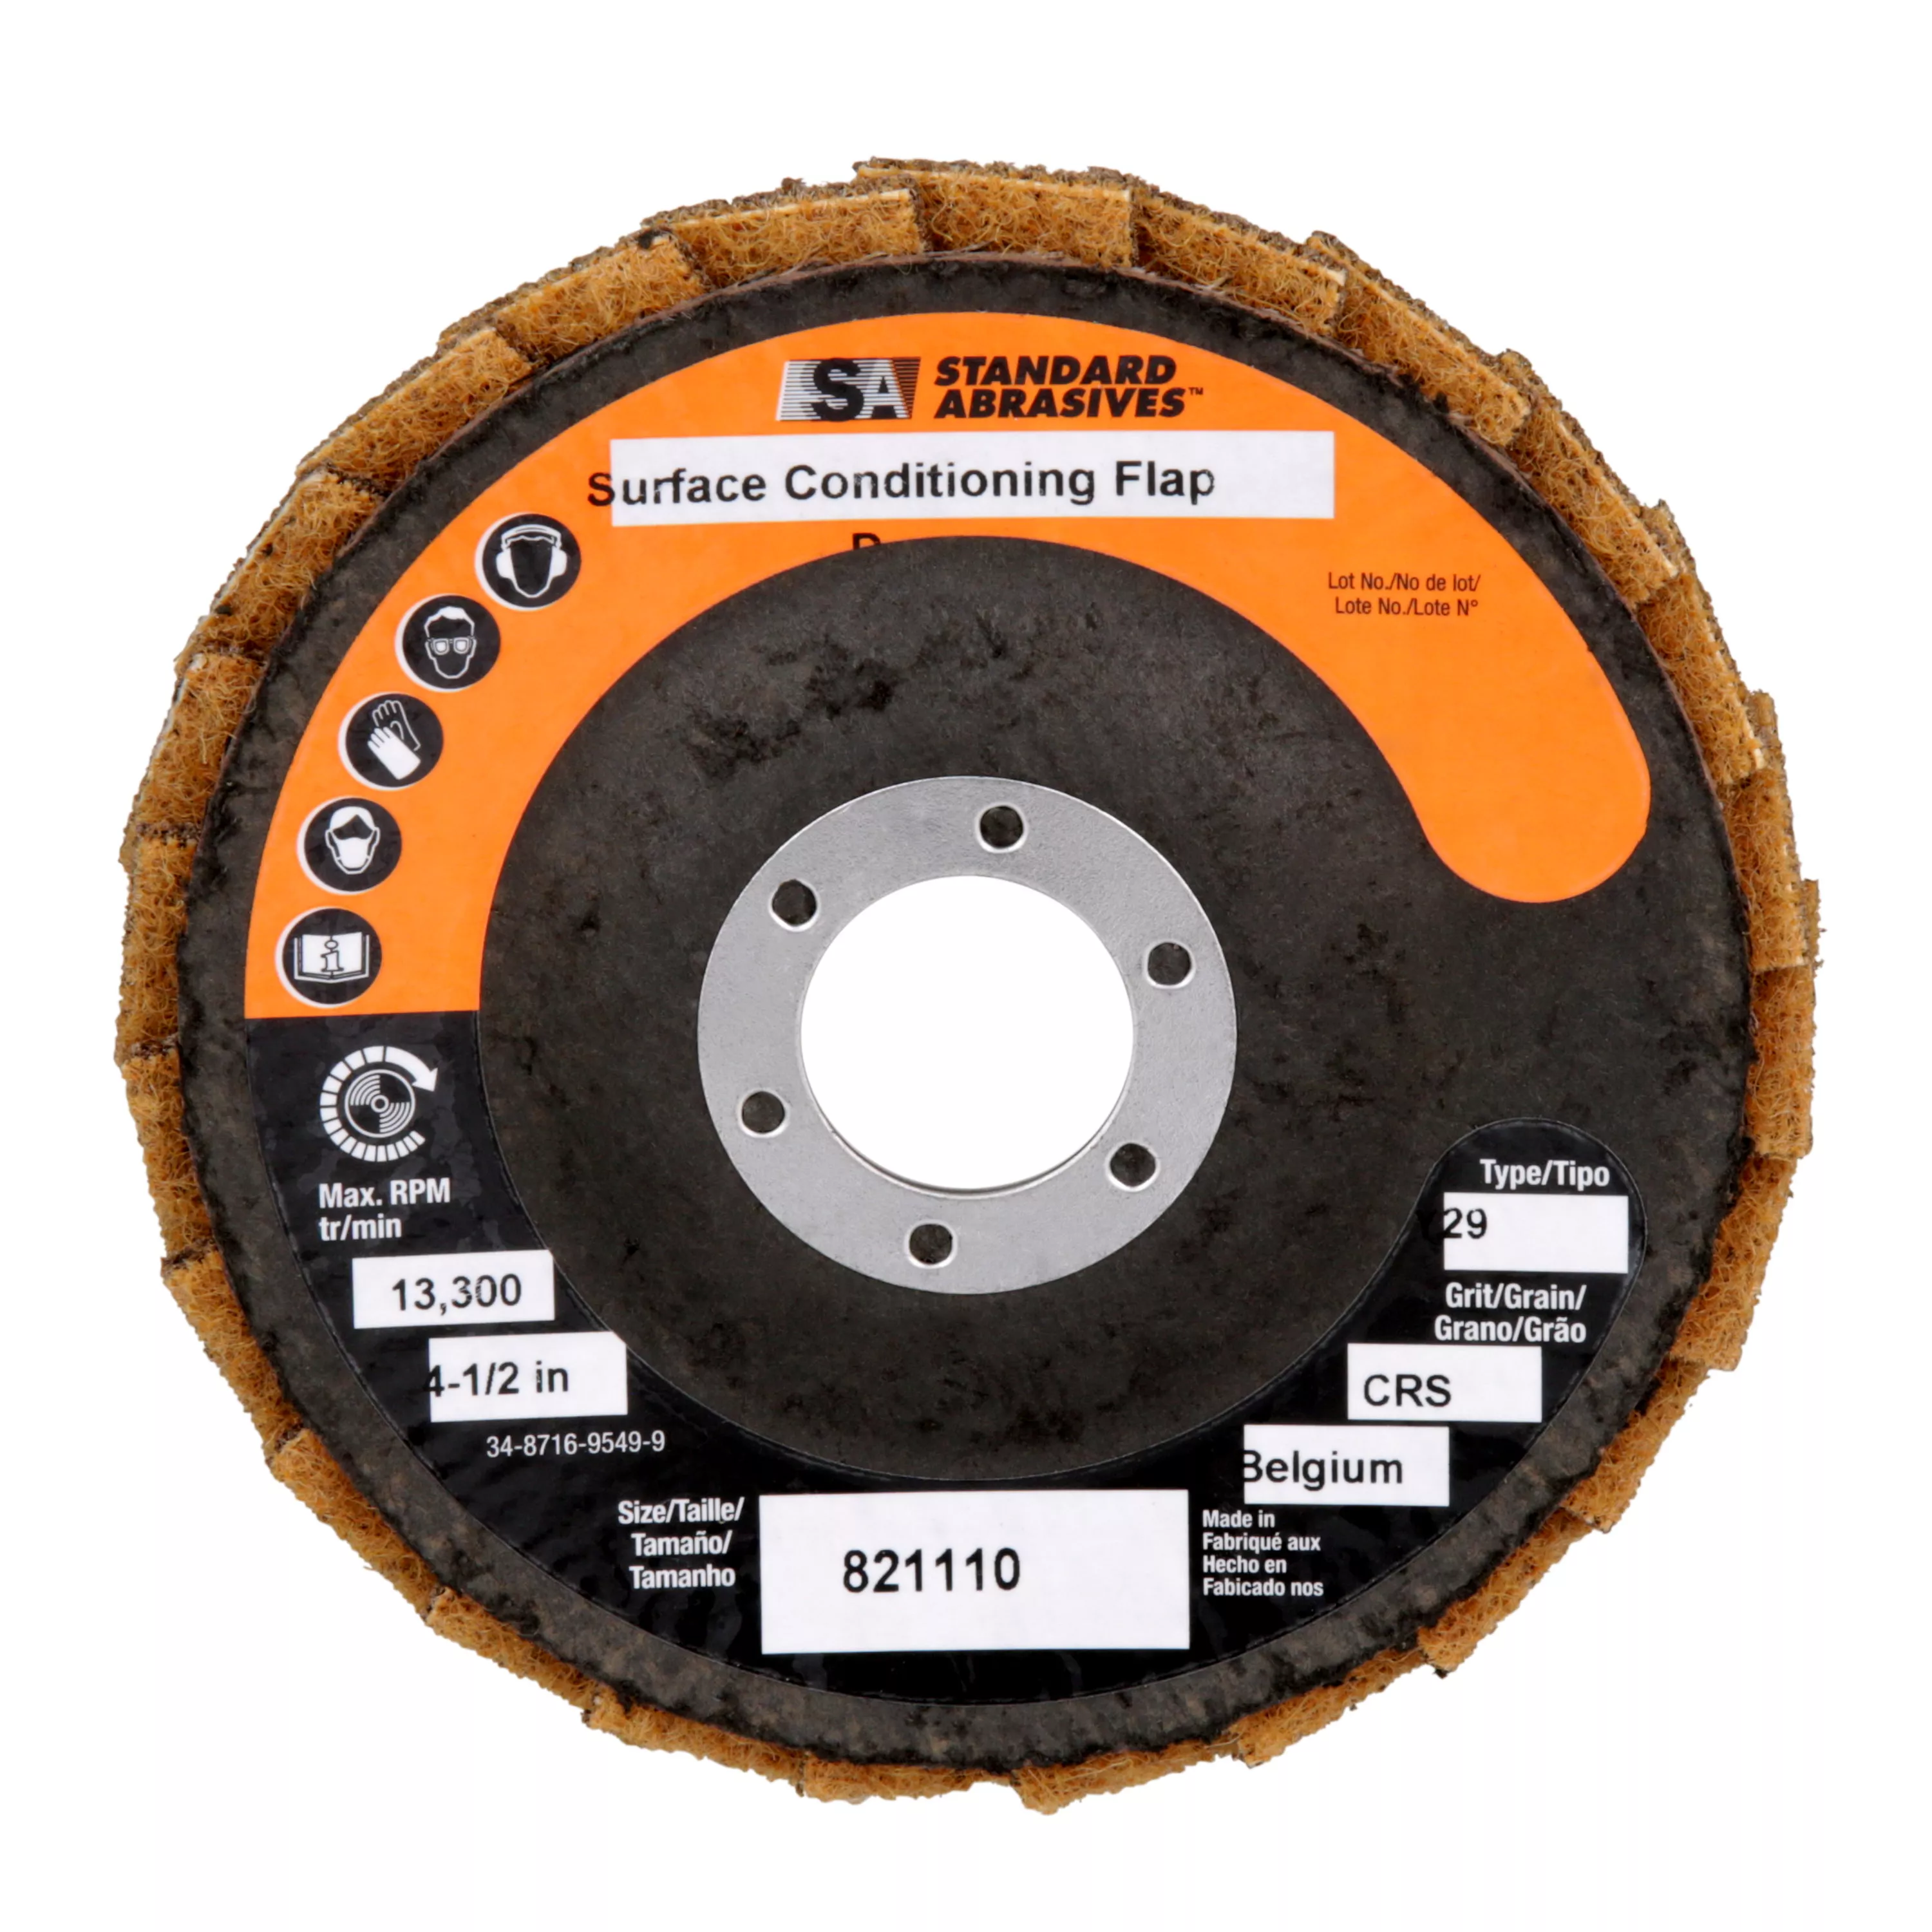 SKU 7000121833 | Standard Abrasives™ Surface Conditioning Flap Disc